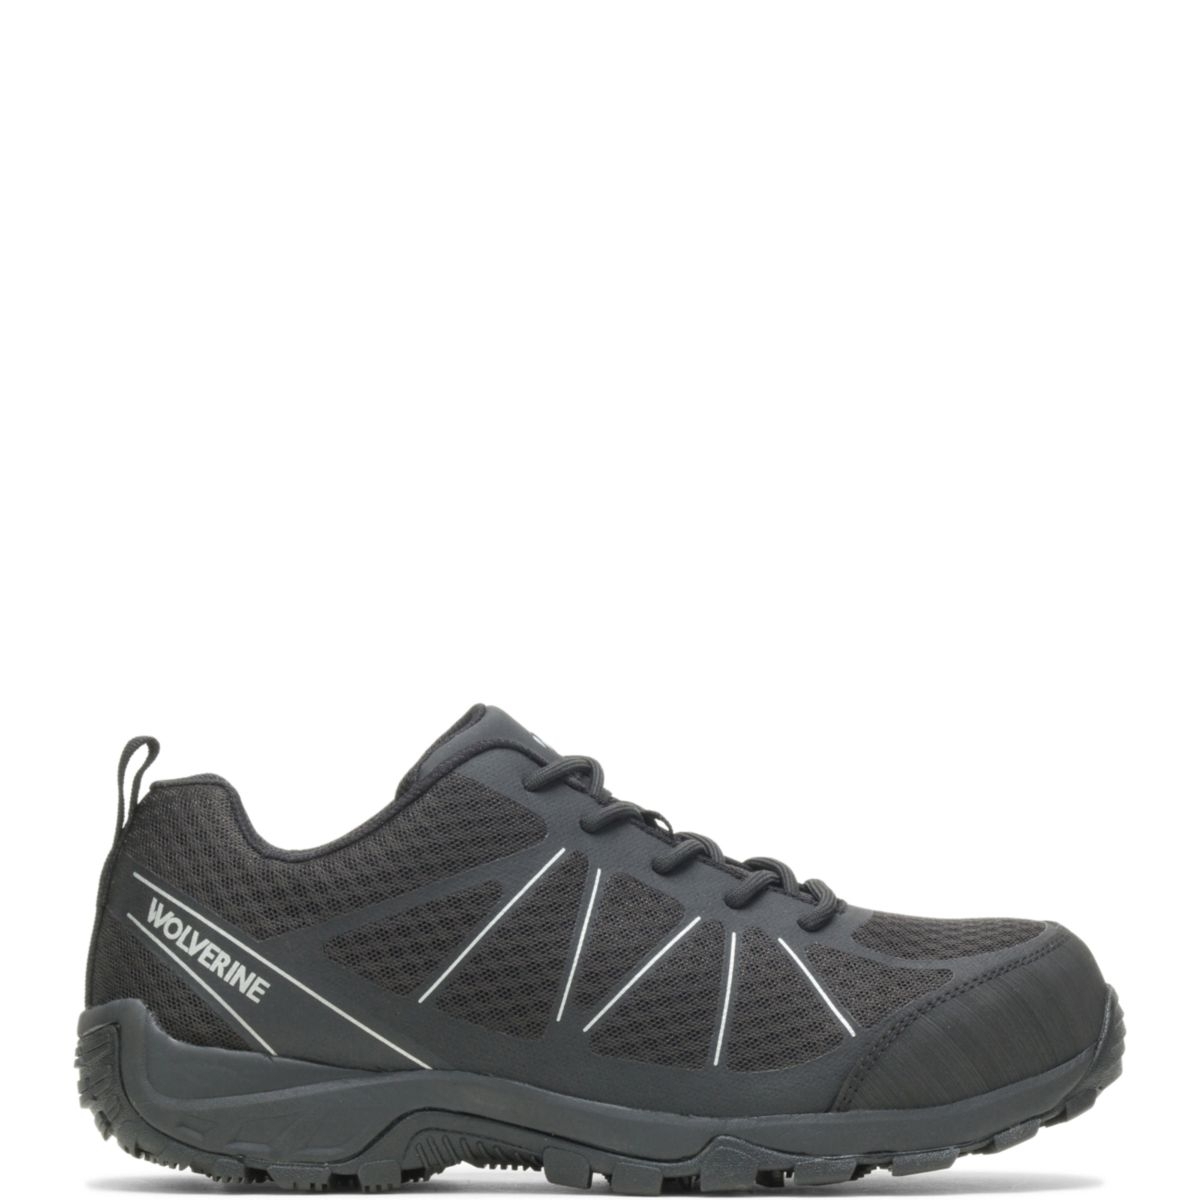 WOLVERINE Men's Amherst II CarbonMAXÂ® Composite Toe Work Shoe Black - W201147 BLACK - BLACK, 8.5